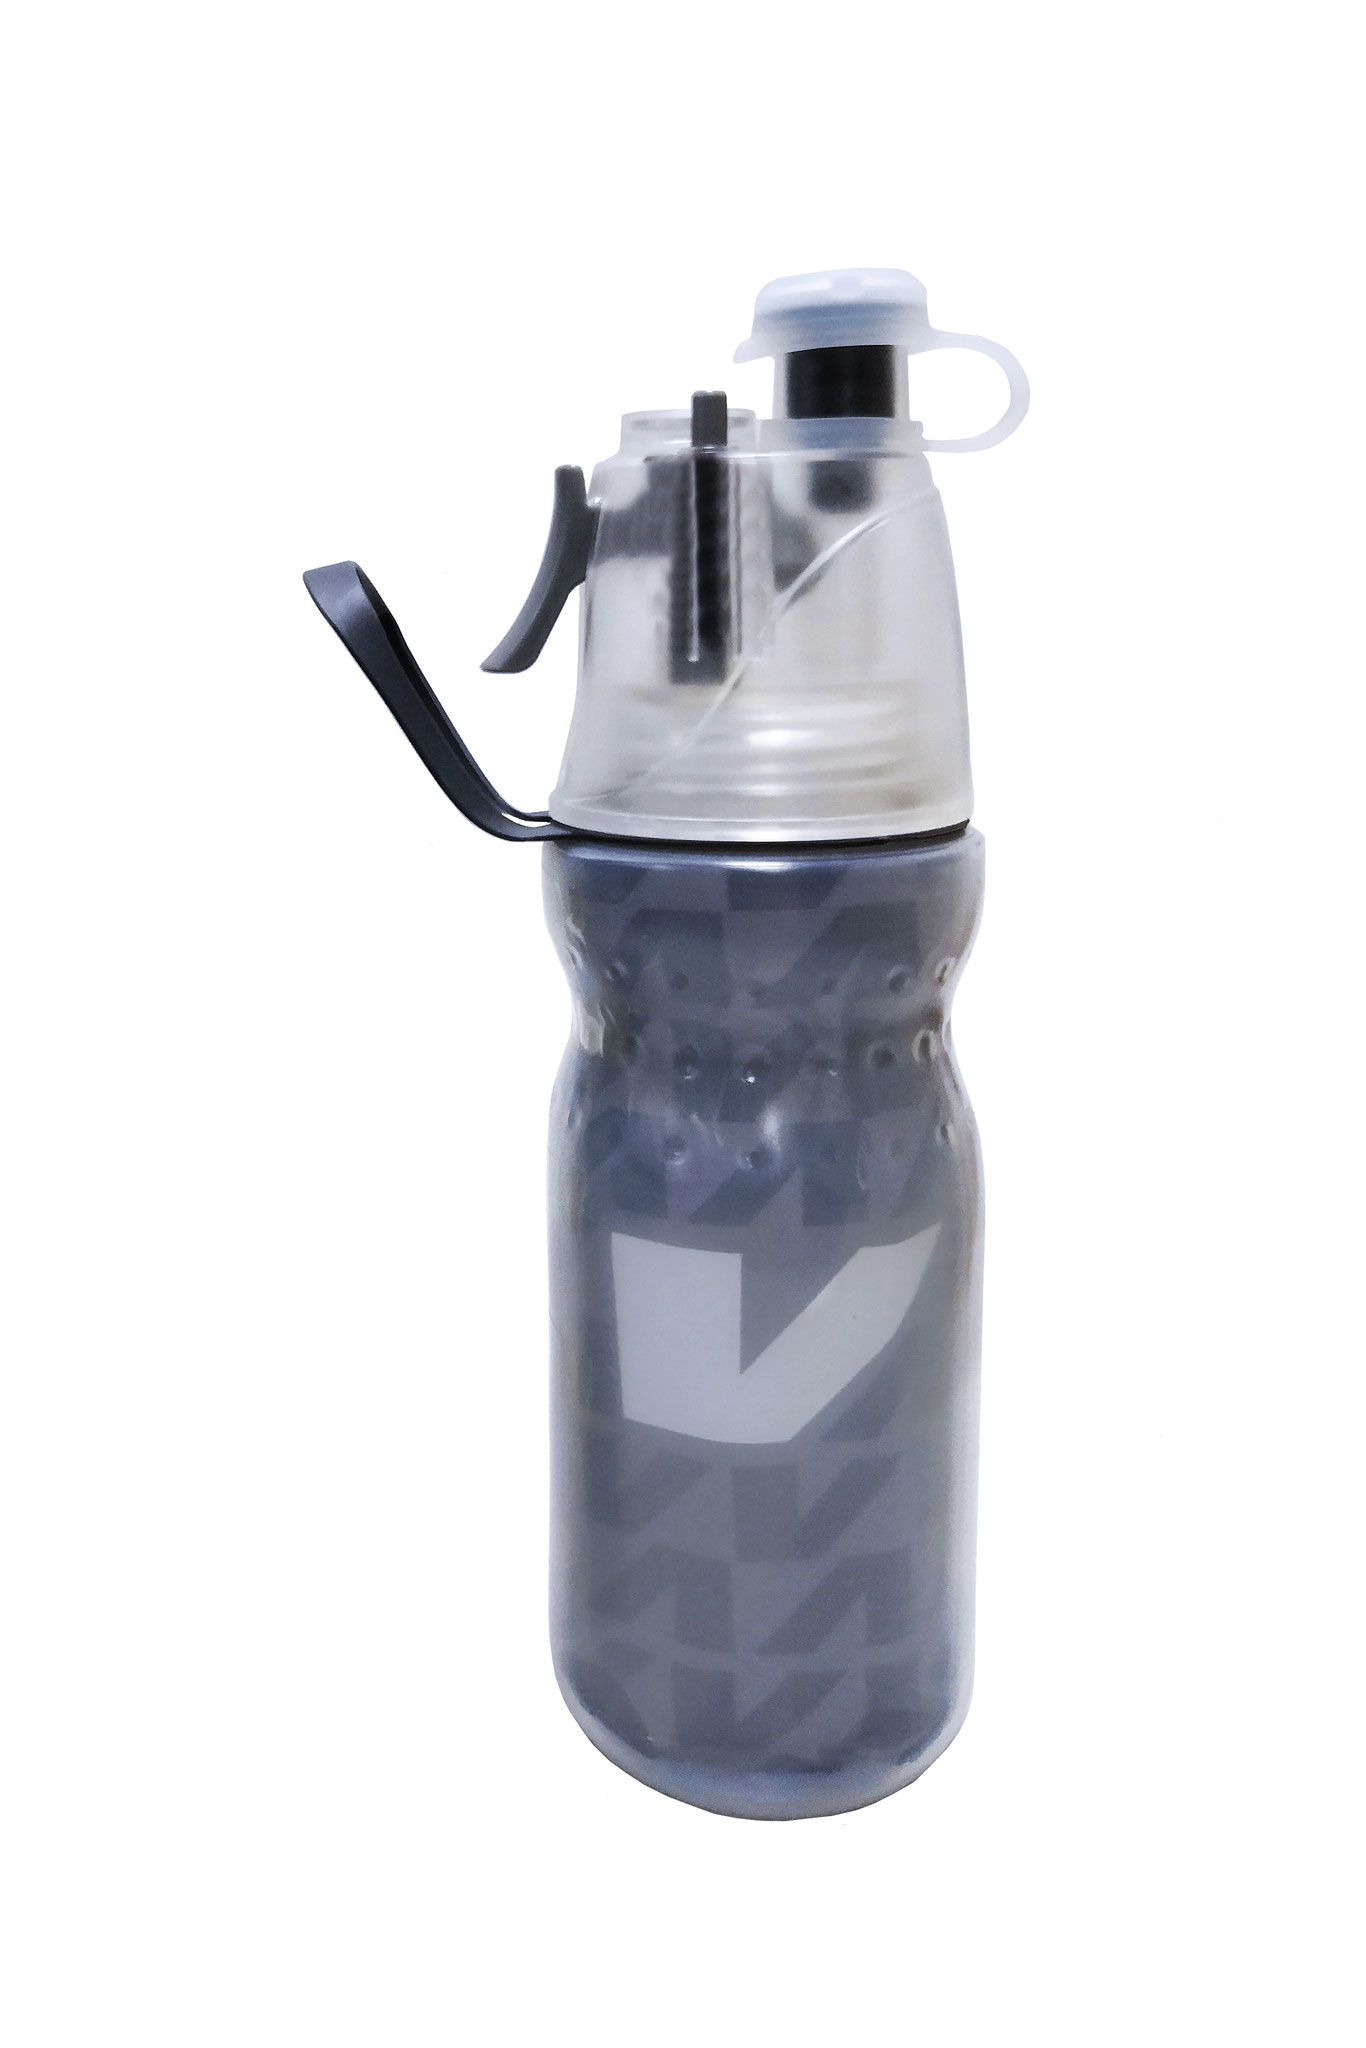 Water bottle with sprayer